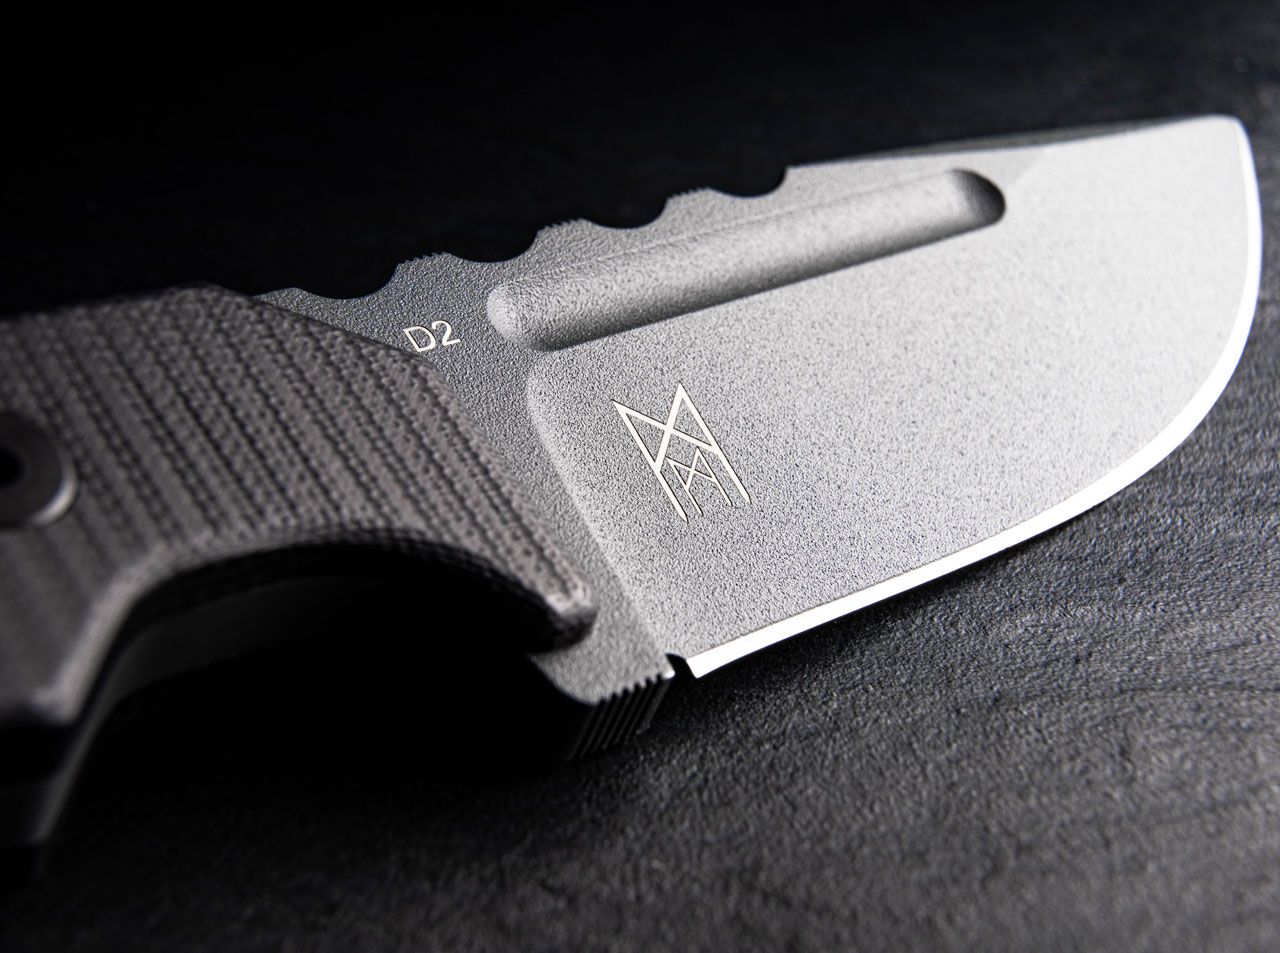 Boker Plus Little Dvalin 3.15" D2 G10 Fixed Blade Knife with Kydex Sheath 02BO033